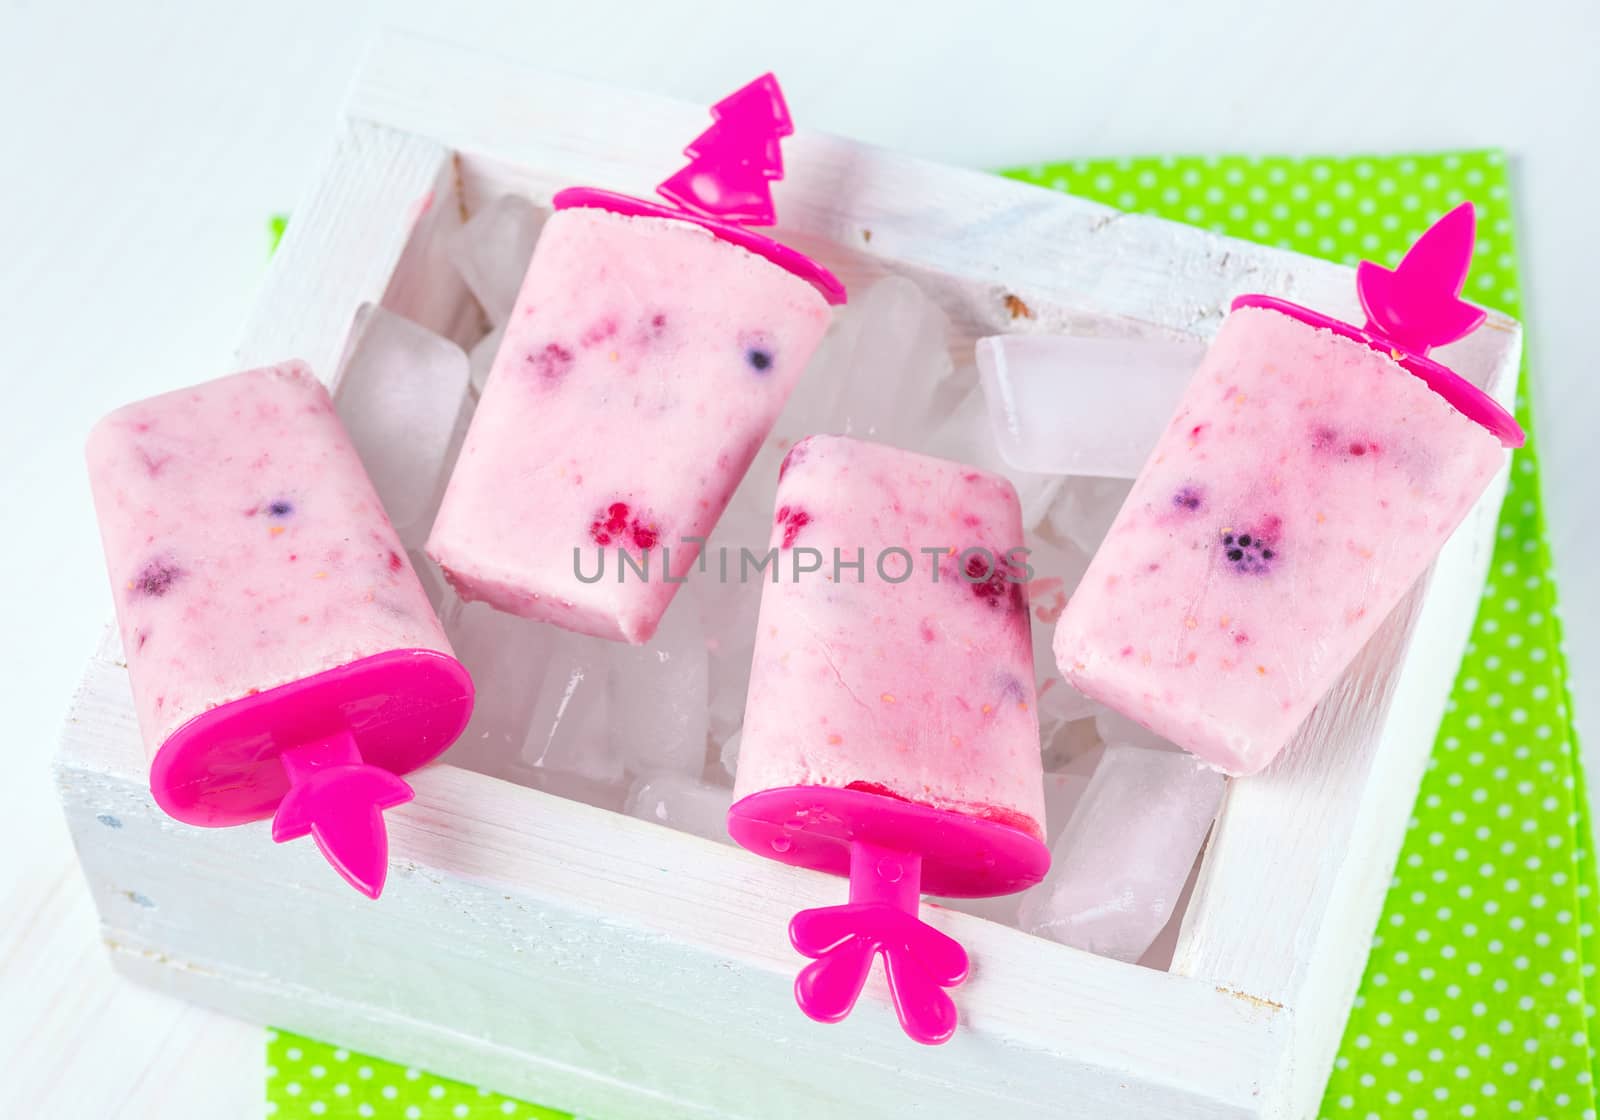 Homemade ice cream, frozen yogurt with blackberries, blueberries by iprachenko